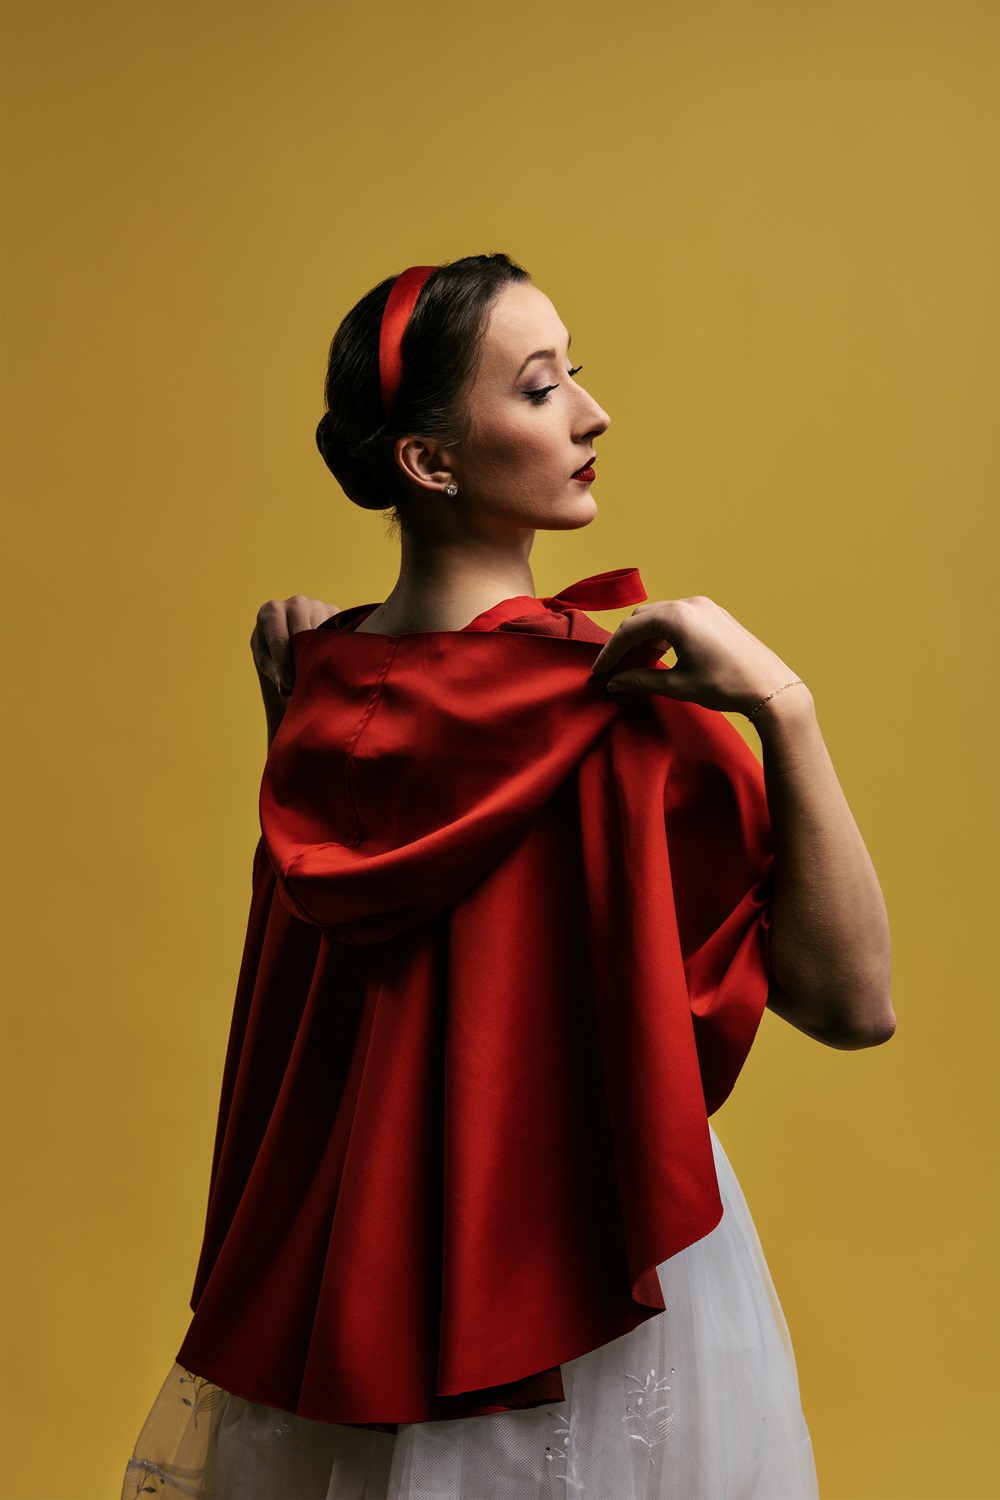 Avant Chamber Ballet Presents “Snow White” Premiere